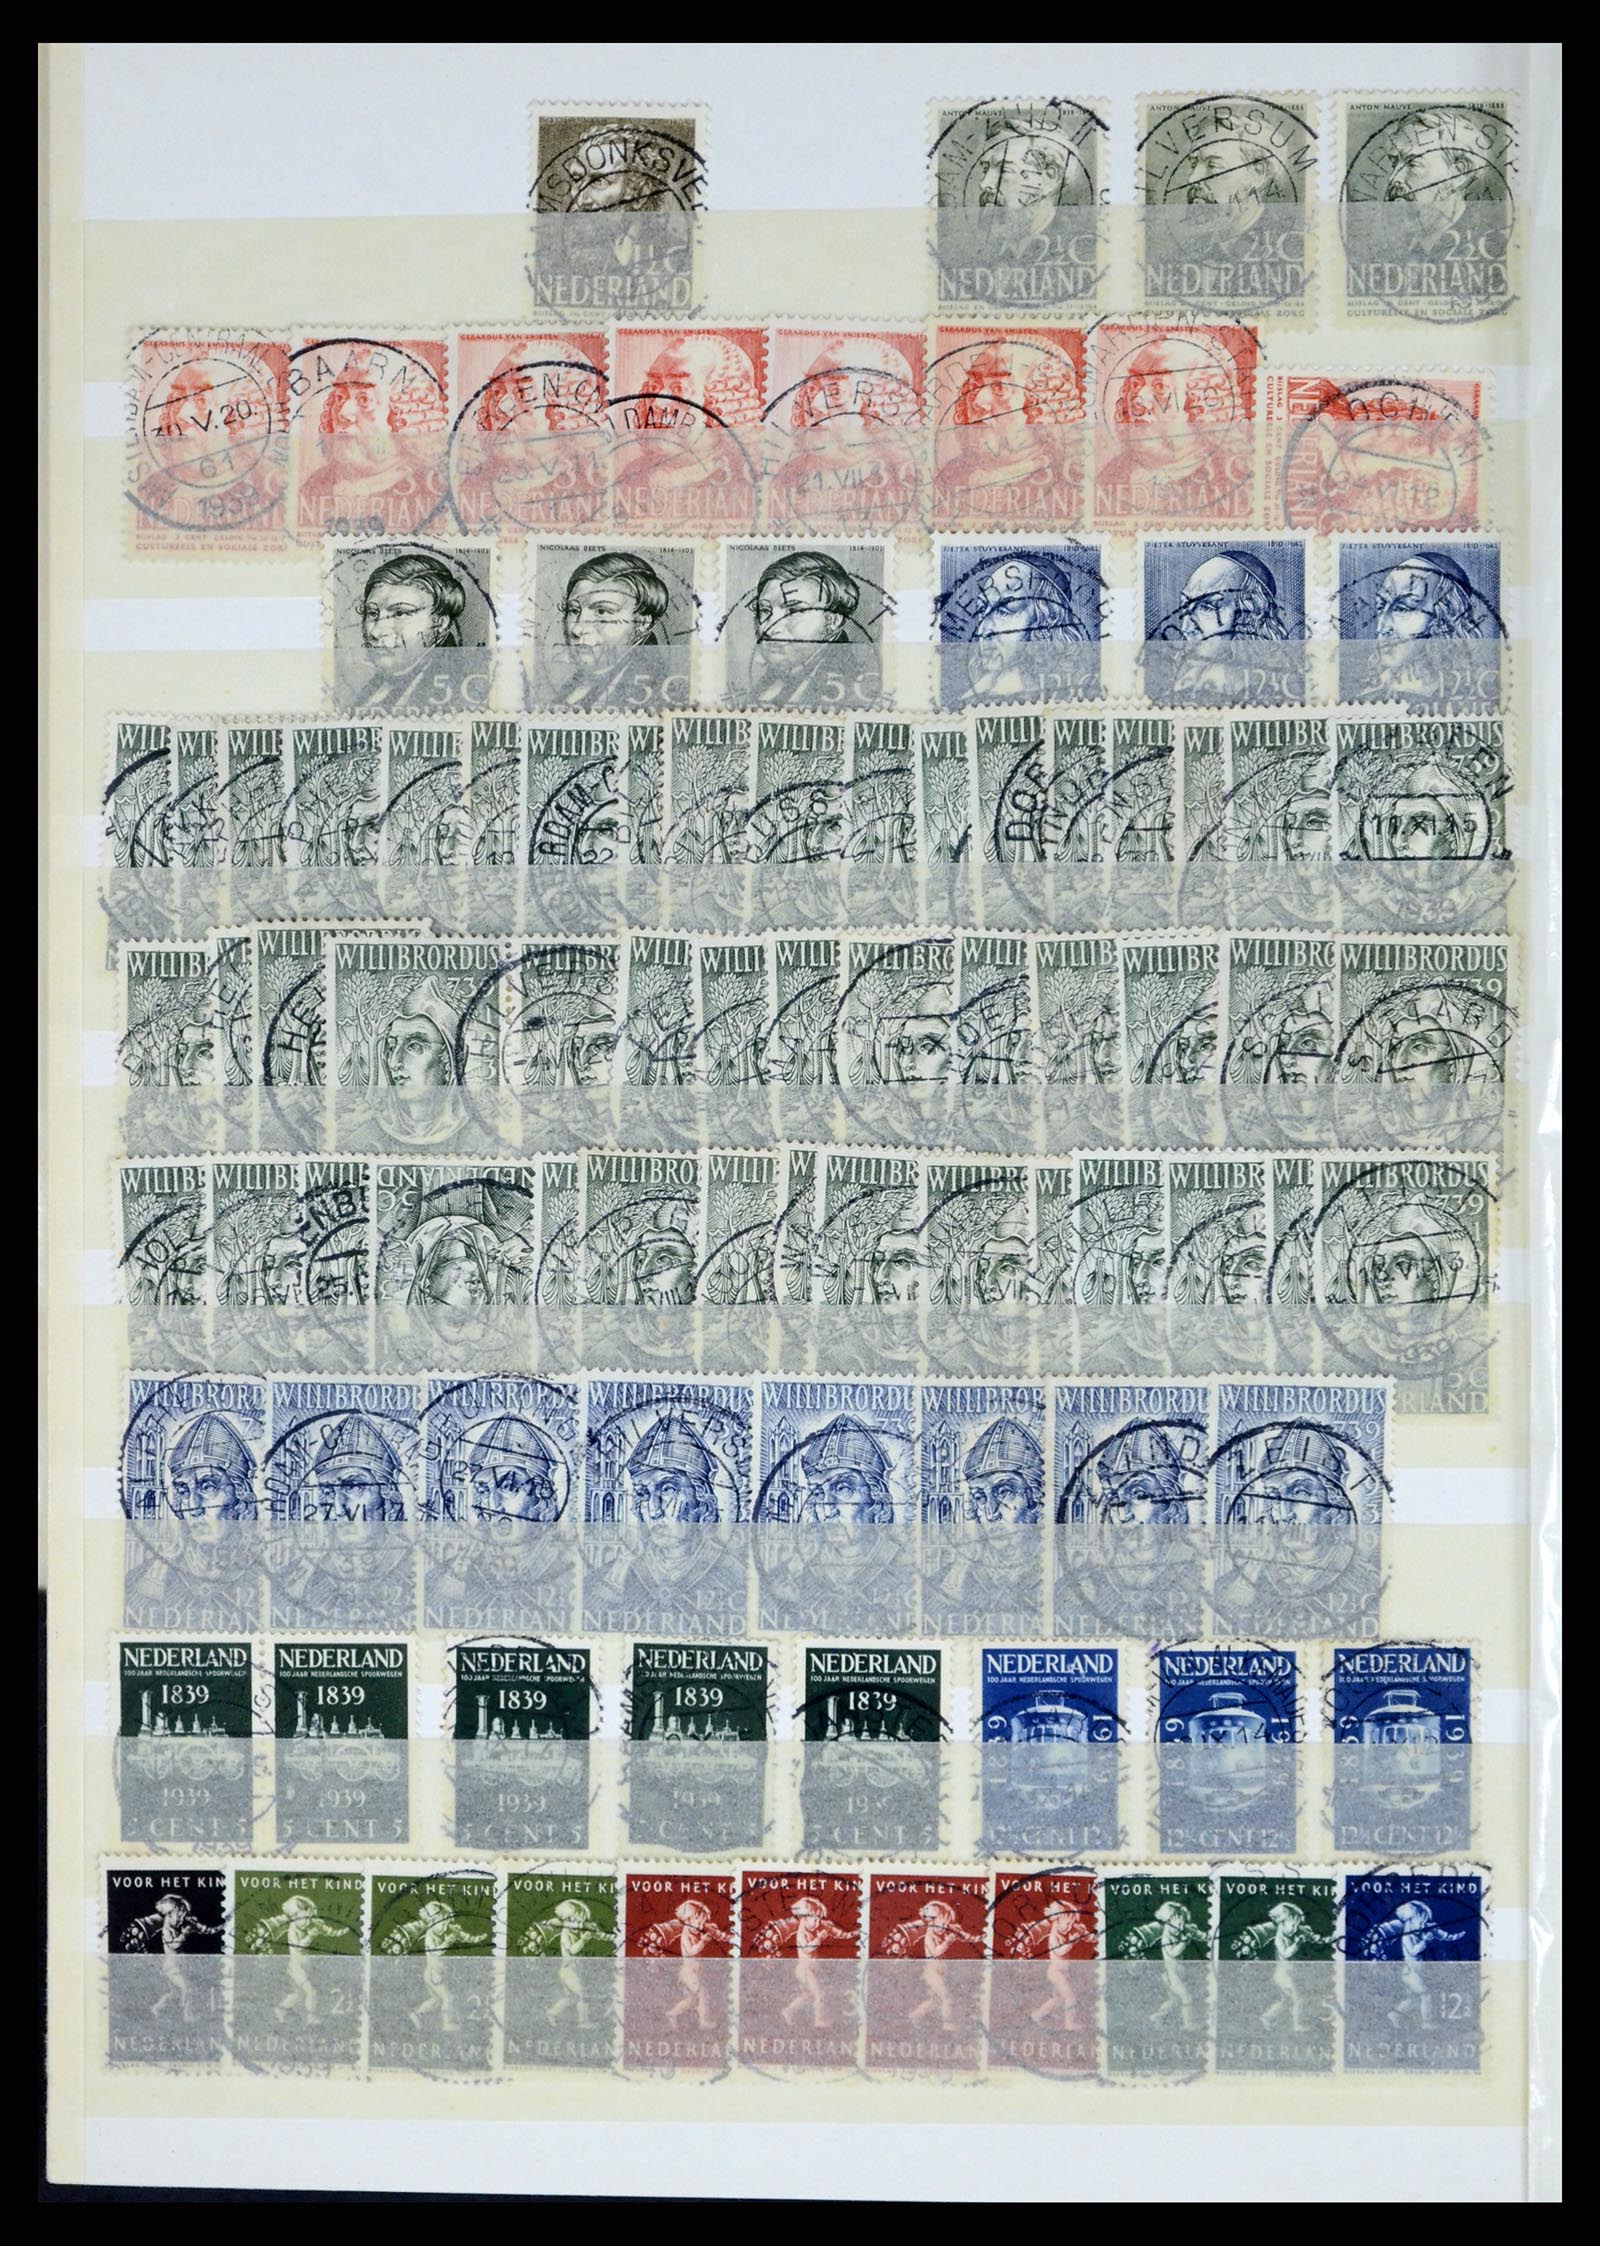 37424 026 - Stamp collection 37424 Netherlands shortbar cancels.